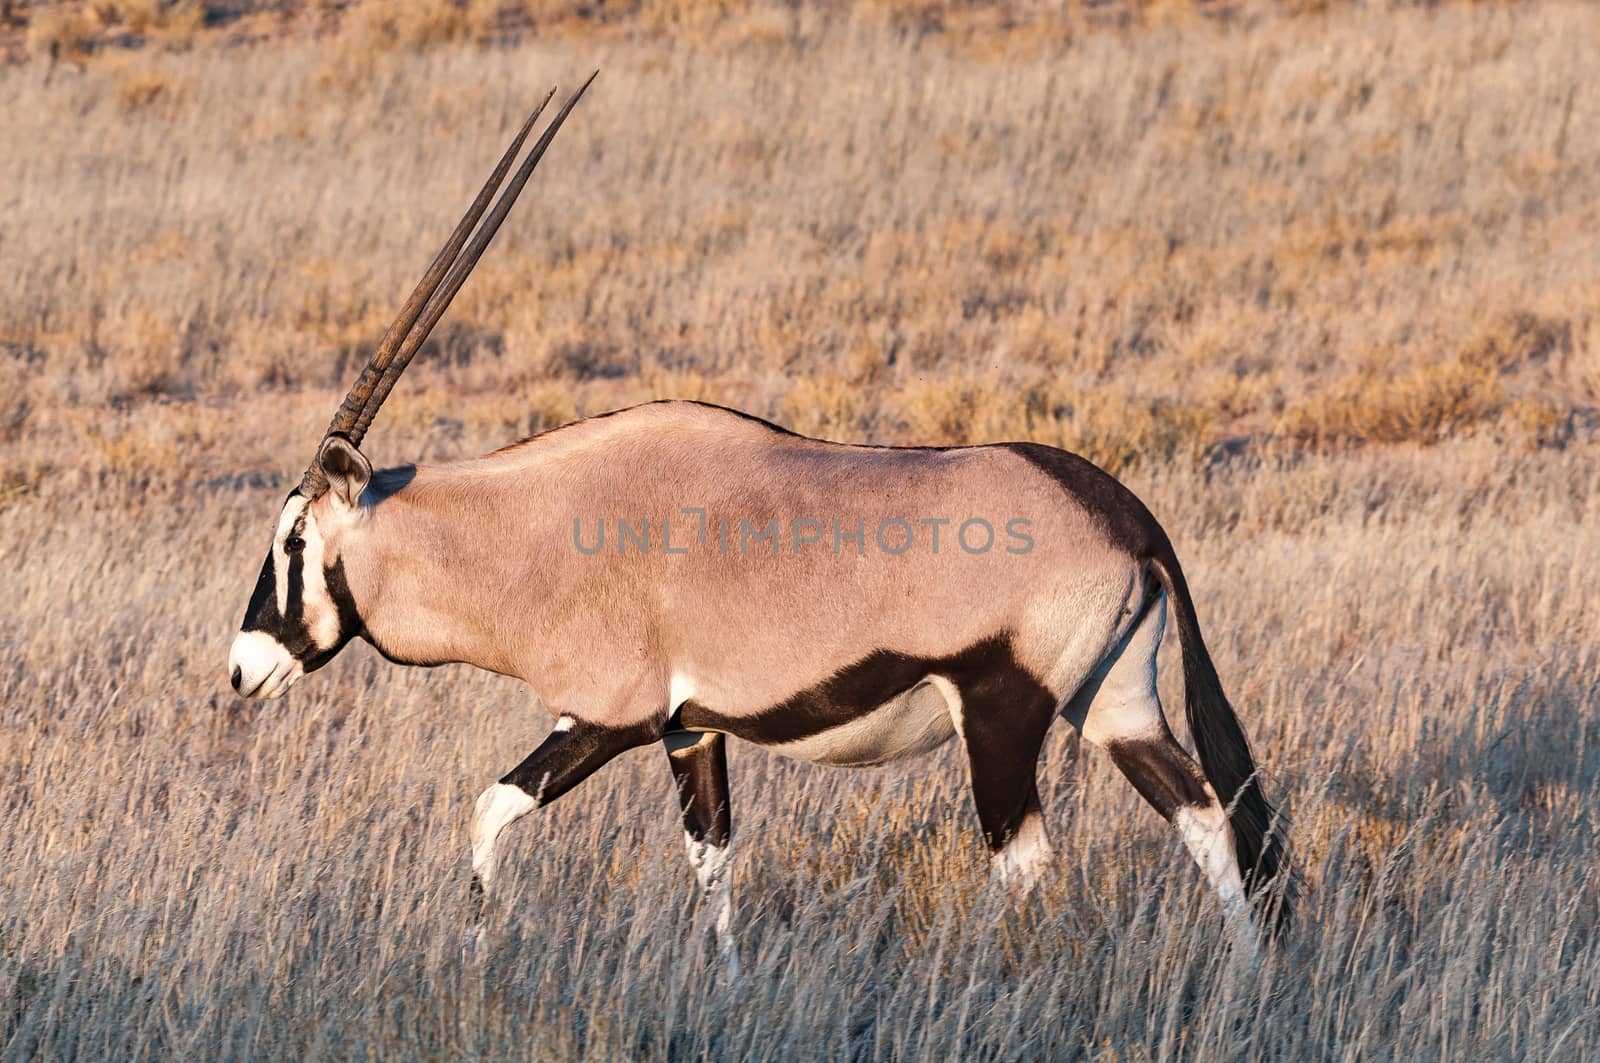 Oryx walking in the arid Kgalagadi by dpreezg